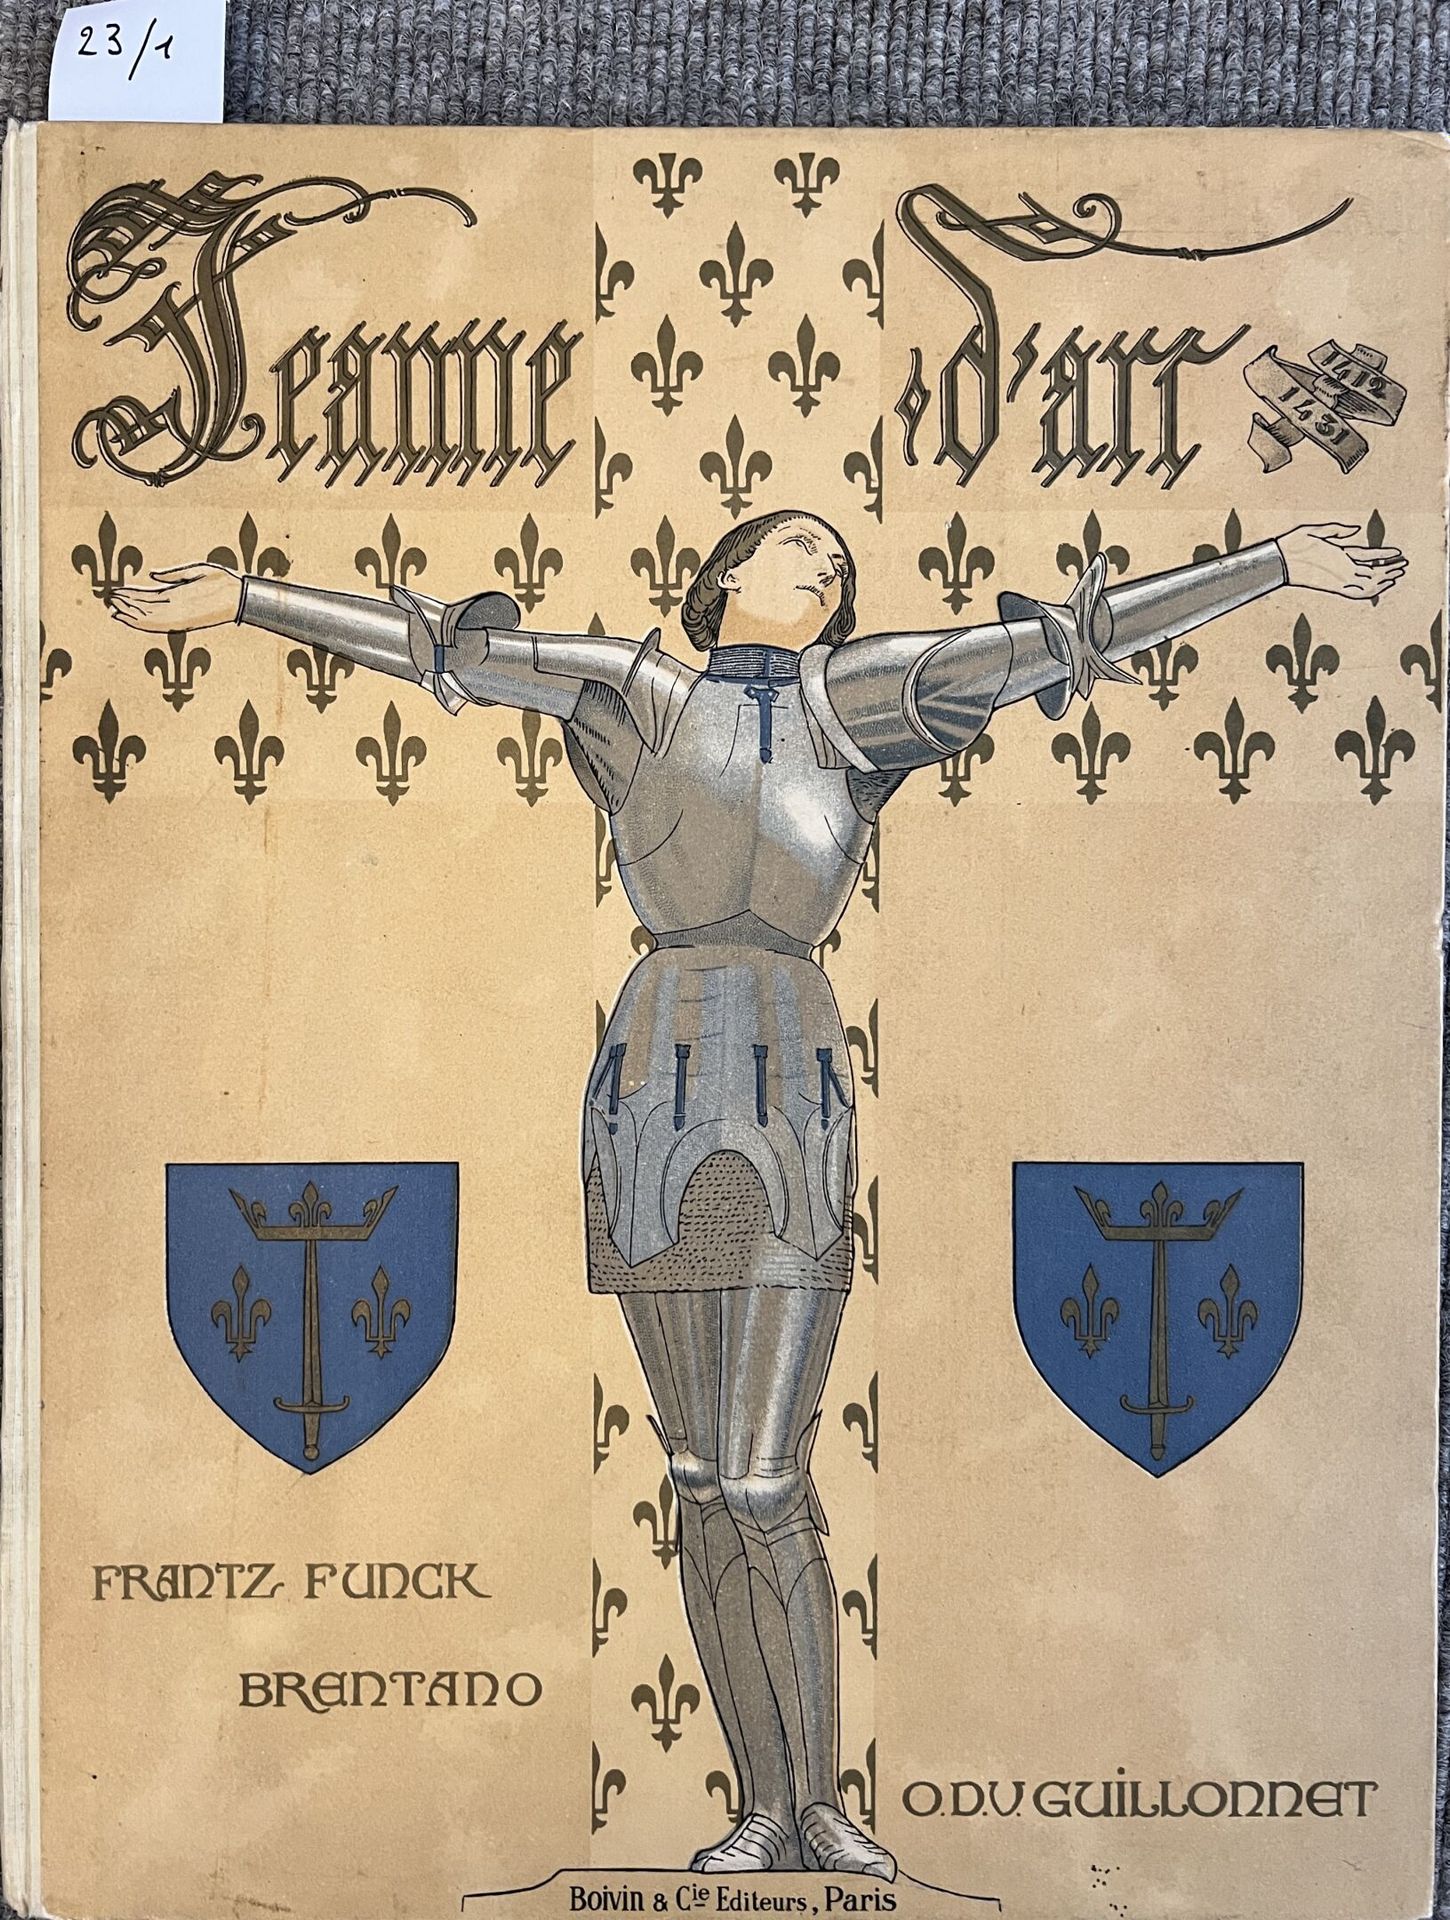 Null Jeanne d'Arc.
Funck-Brentano, O.Guillonnet, édition Boivin & Cie, 1912